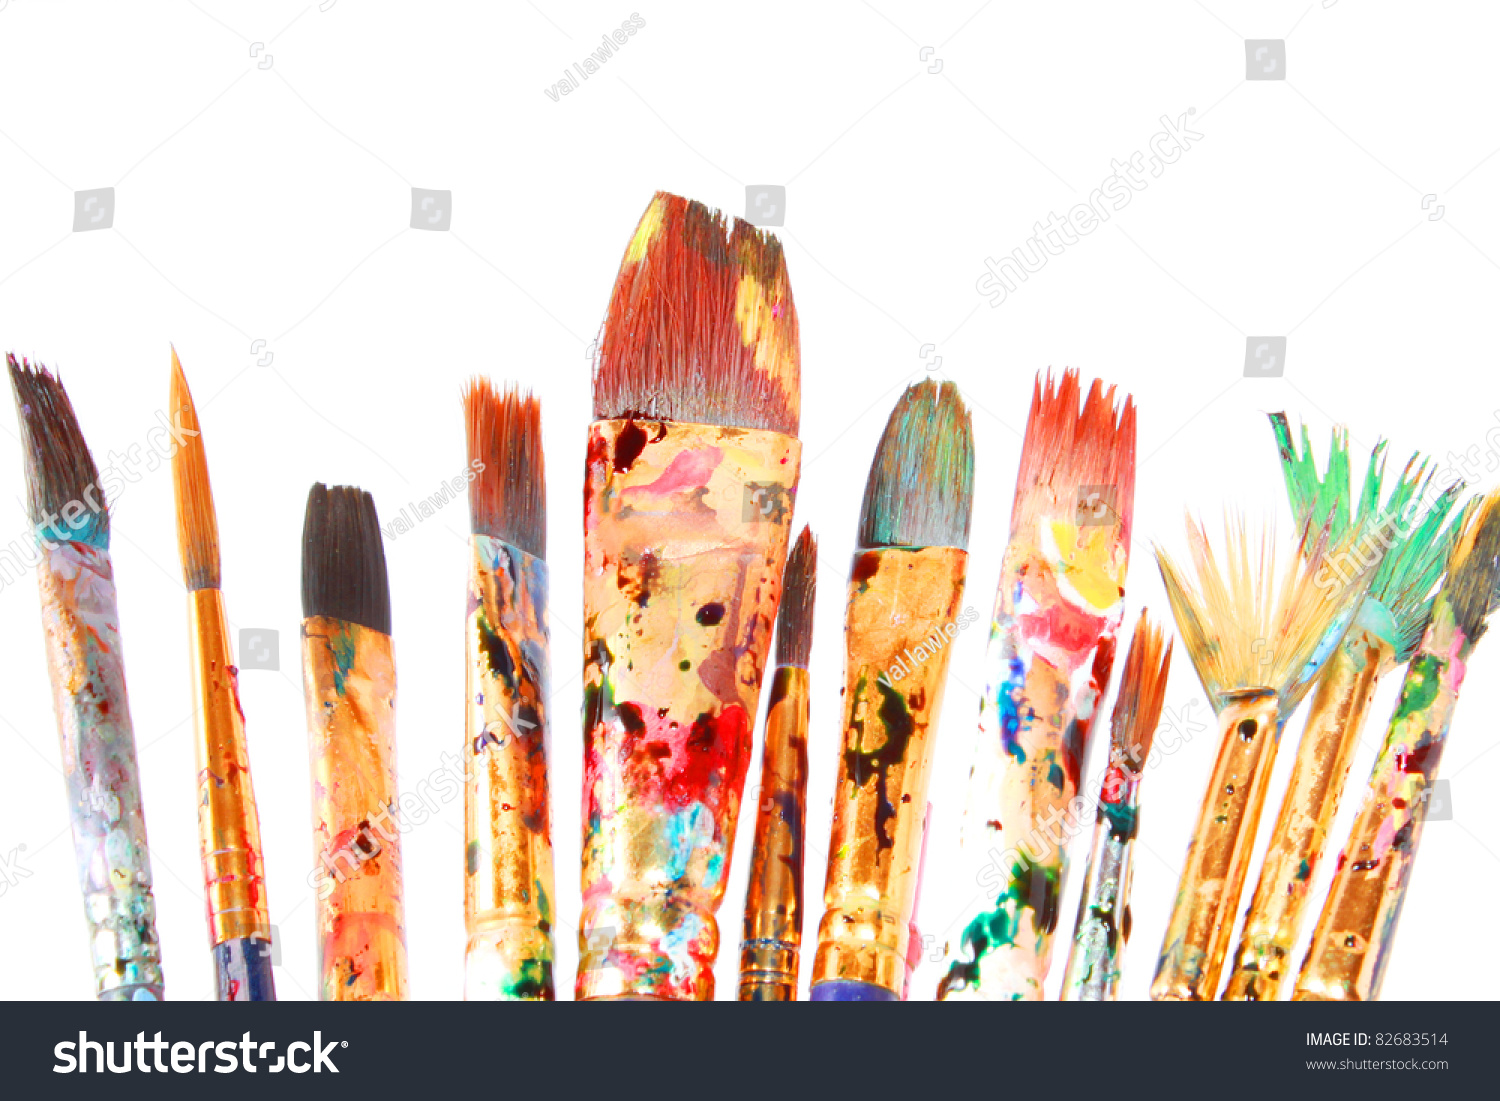 Paint brushes #82683514